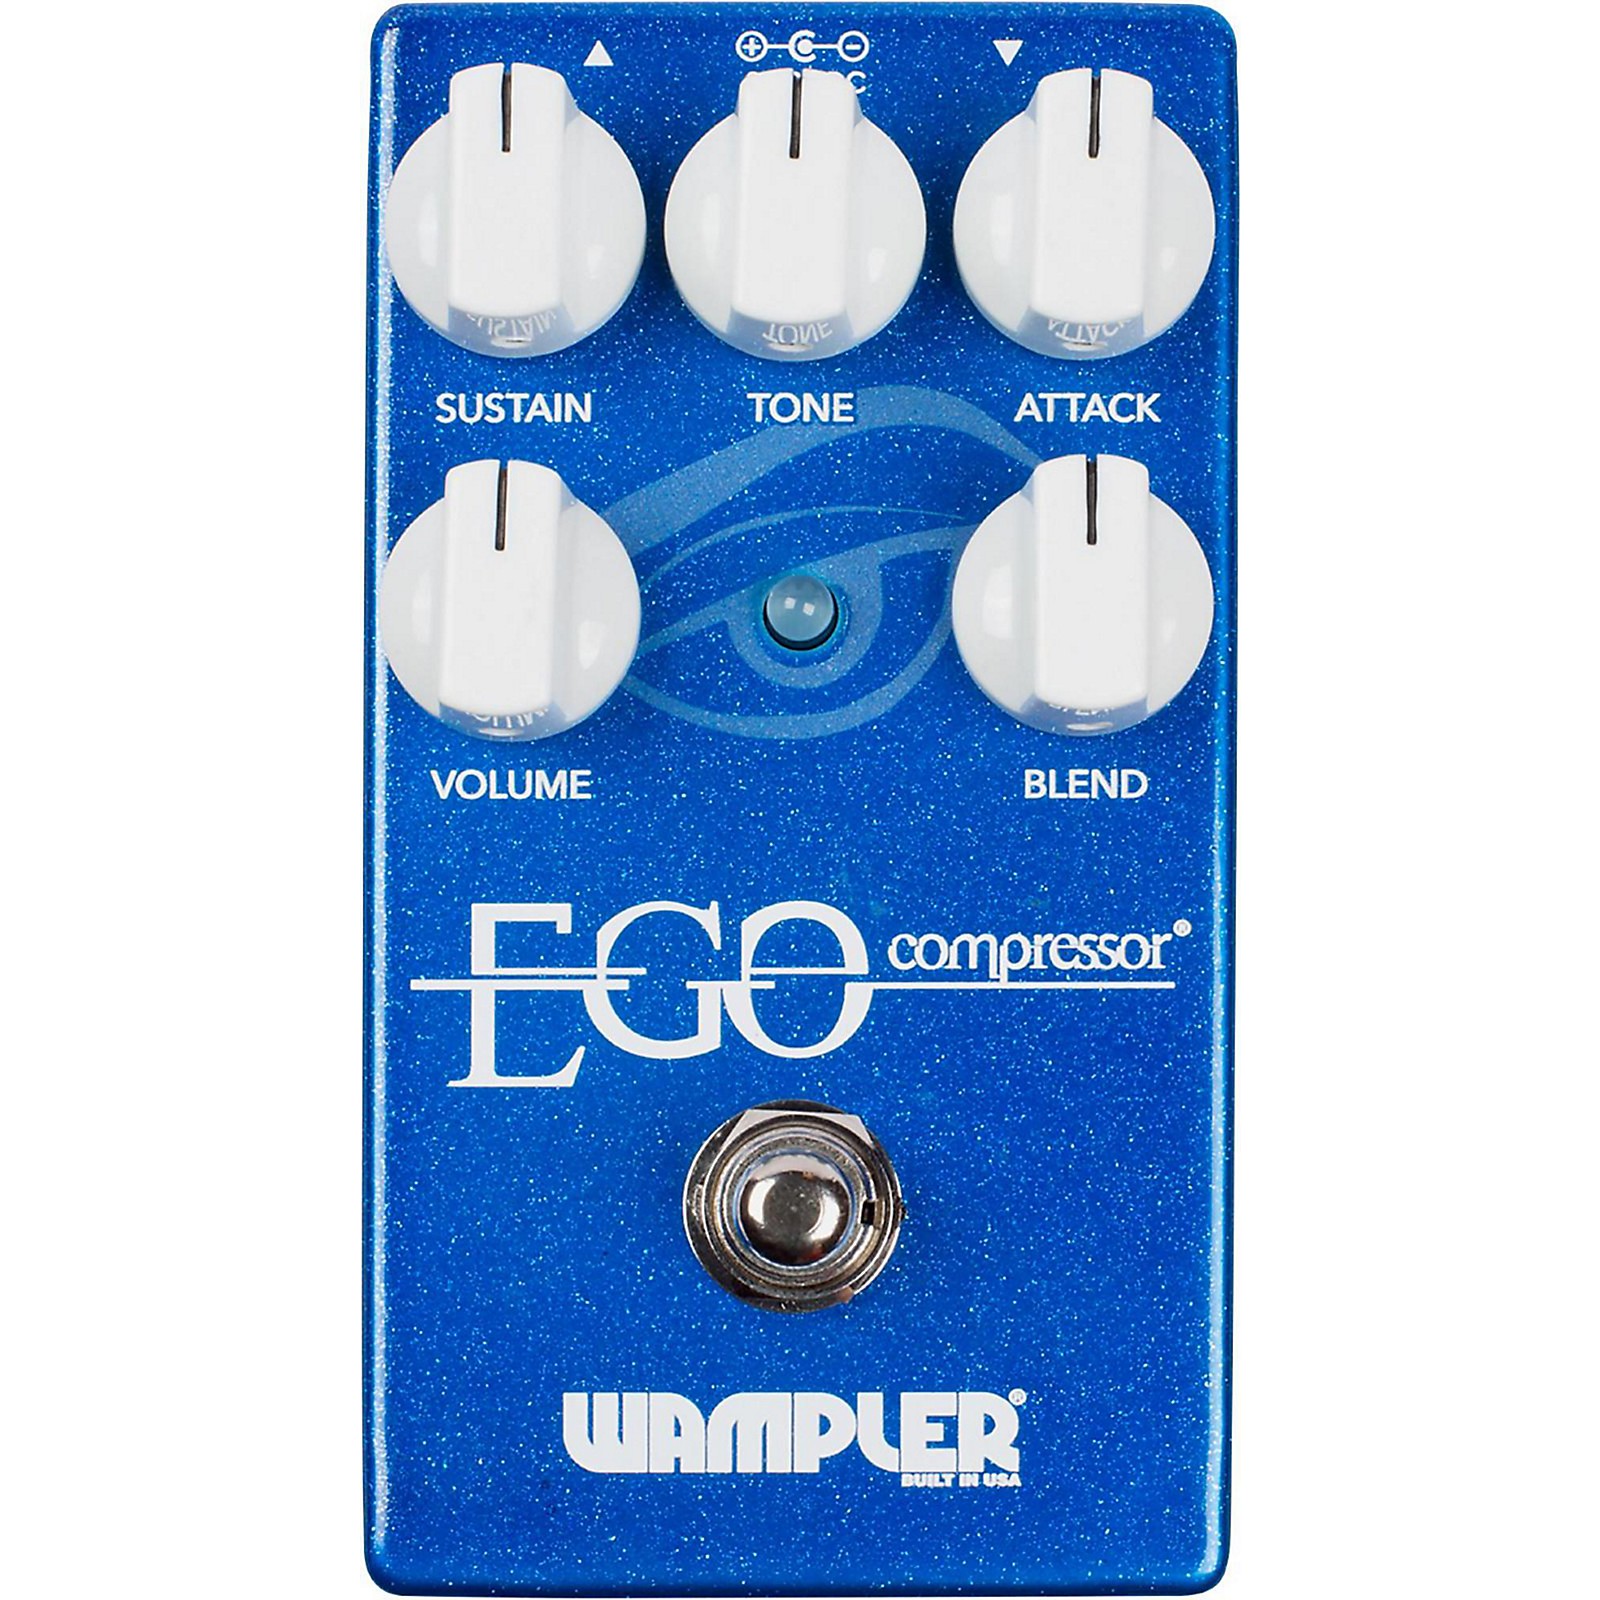 Wampler Ego Compressor Effects Pedal | Guitar Center